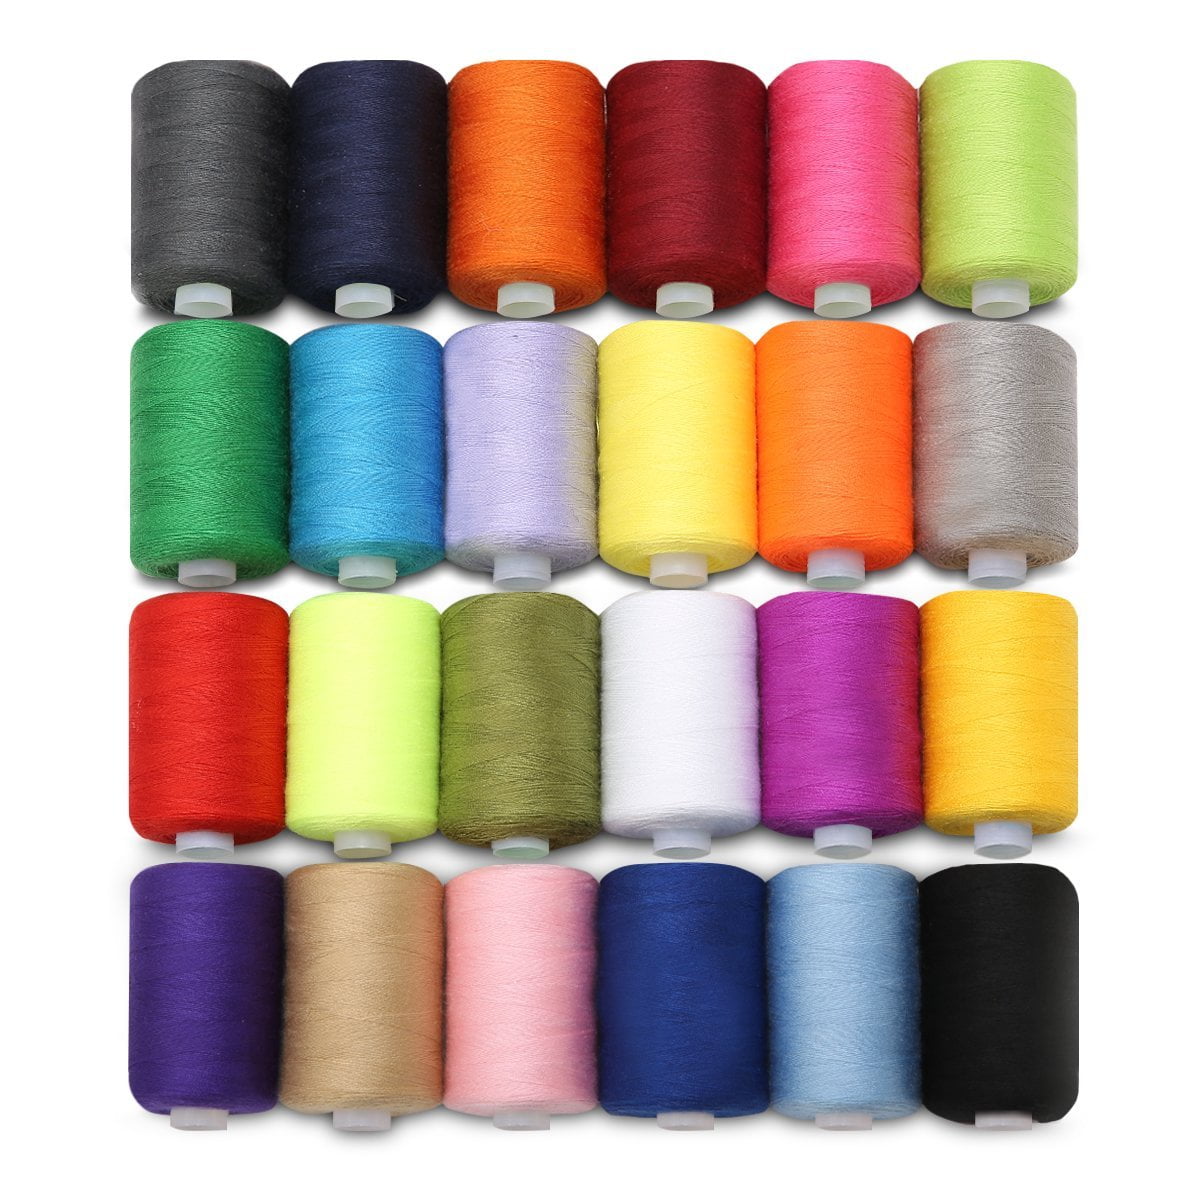 Simthread All Purposes Sewing Thread, 42 Spool 1000 Yards Polyester Thread  for Sewing, Handy Polyester Sewing Threads for Sewing Machine - More Colors  - 42 Color